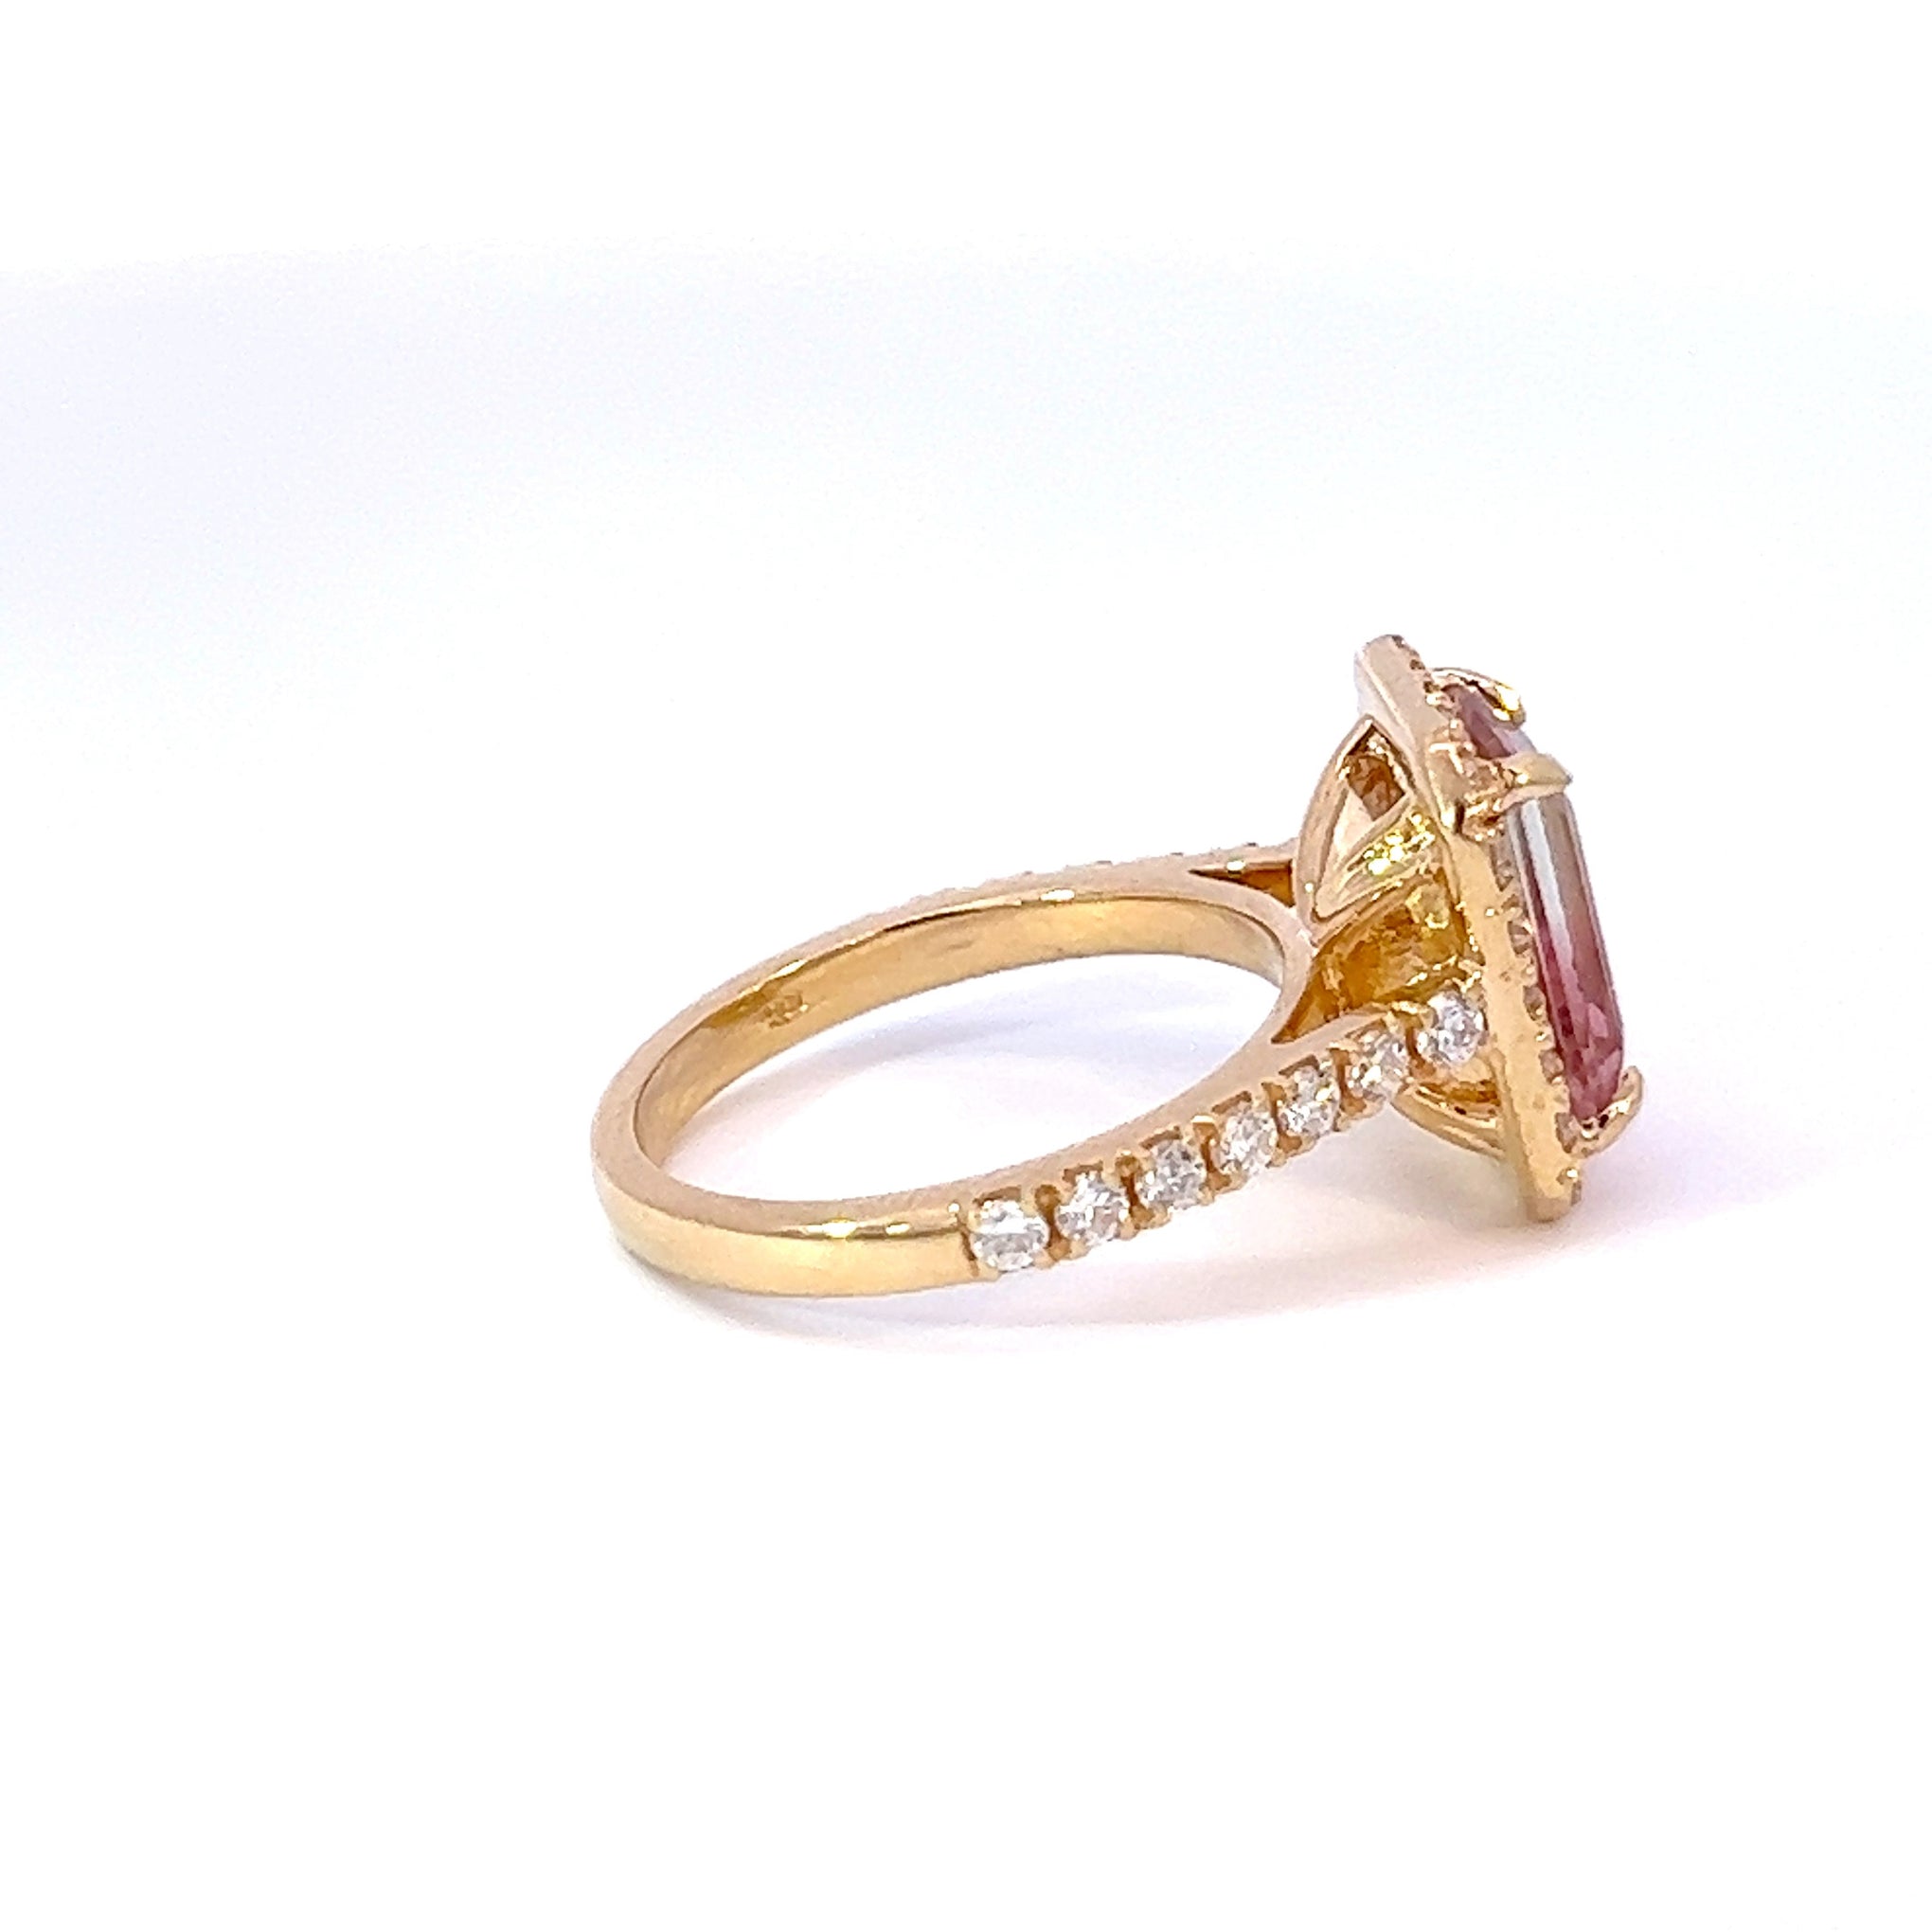 Bi-color Tourmaline and Diamond Cocktail Ring